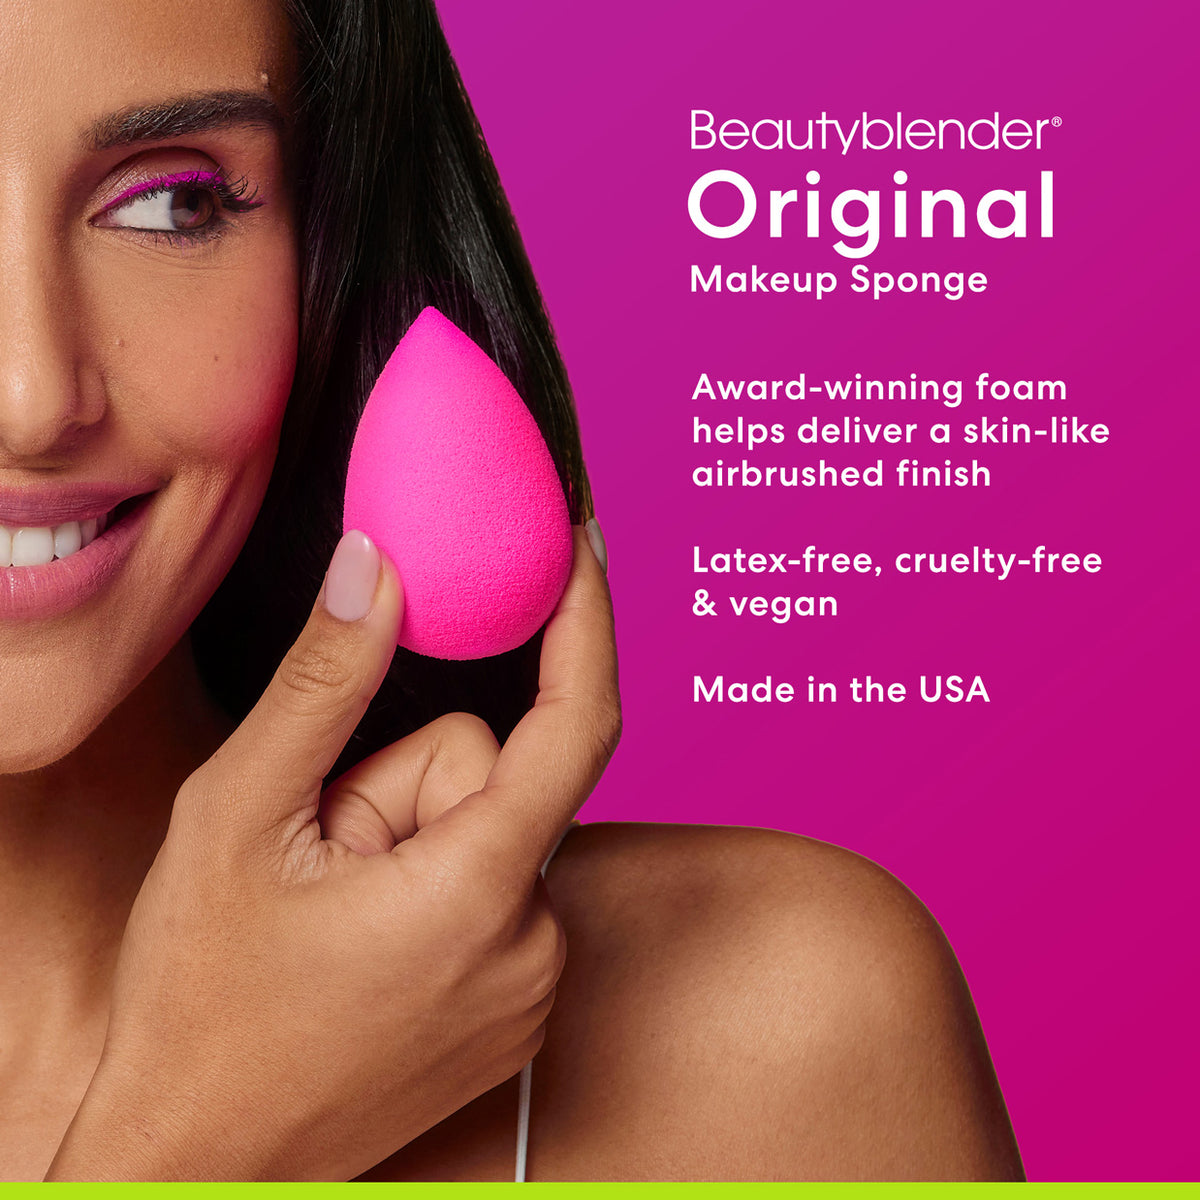 Beautyblender® Original Makeup Sponge.